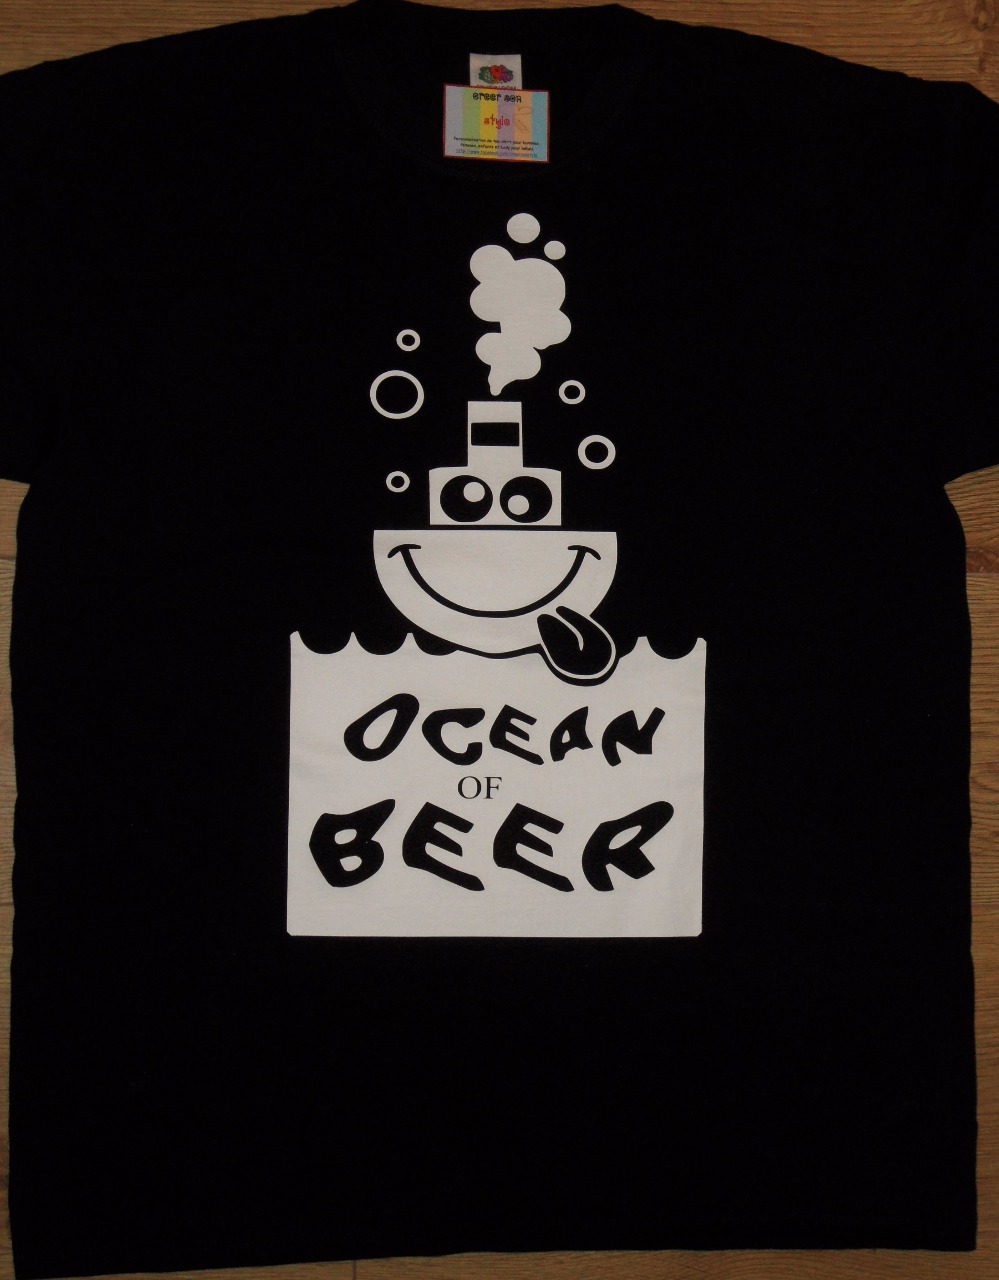 tee shirt "Ocean of beer"